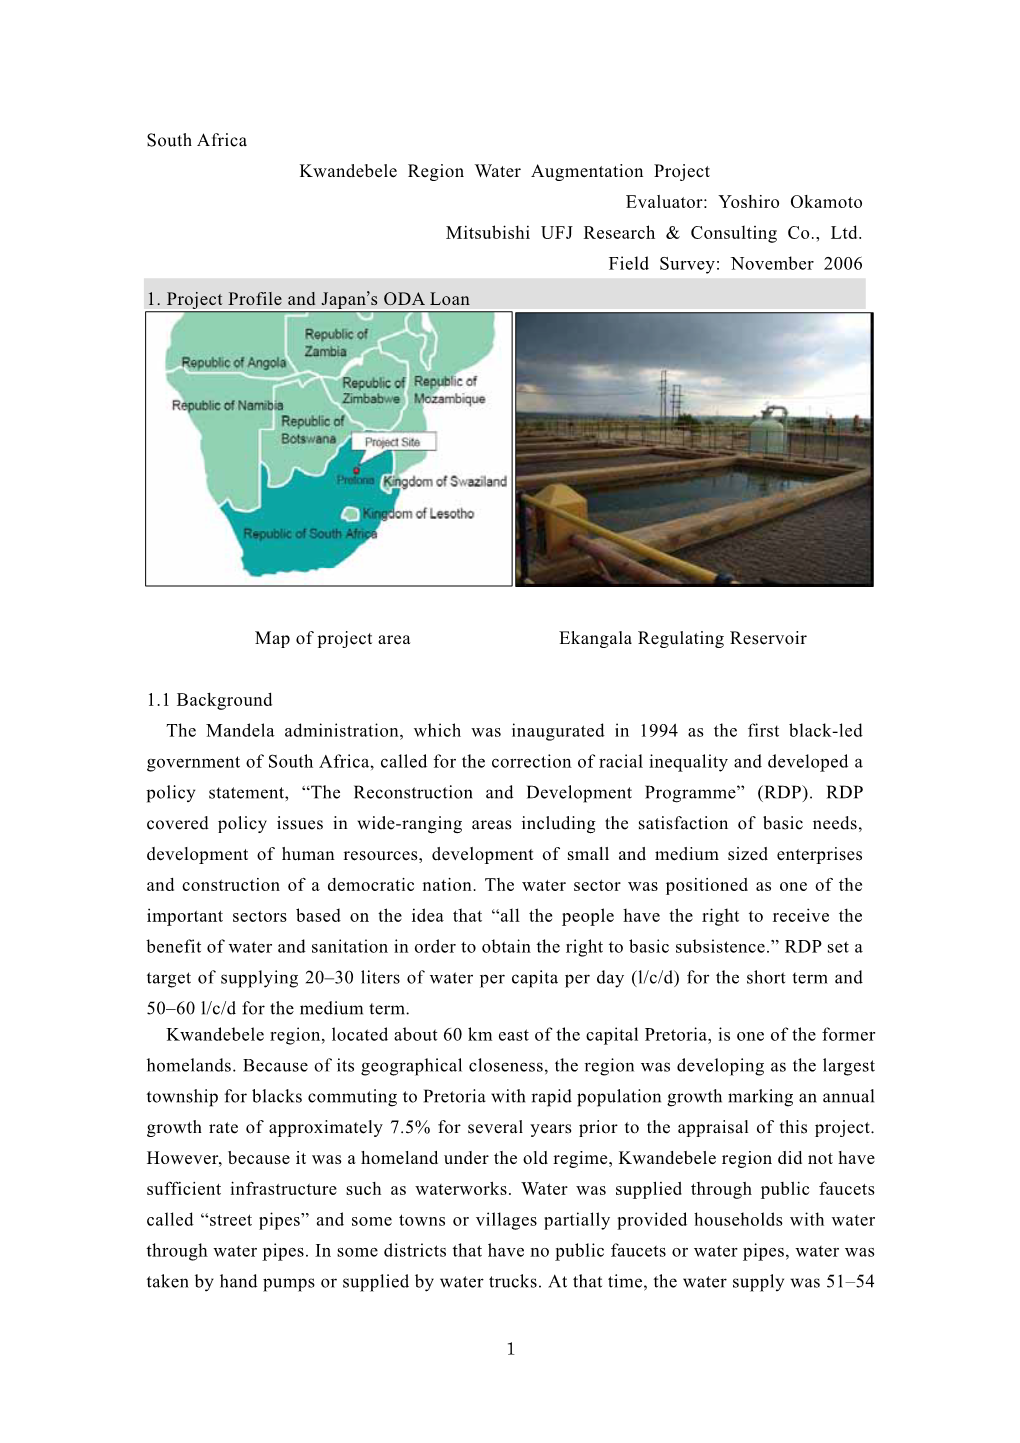 South Africa Kwandebele Region Water Augmentation Project Evaluator: Yoshiro Okamoto Mitsubishi UFJ Research & Consulting Co., Ltd